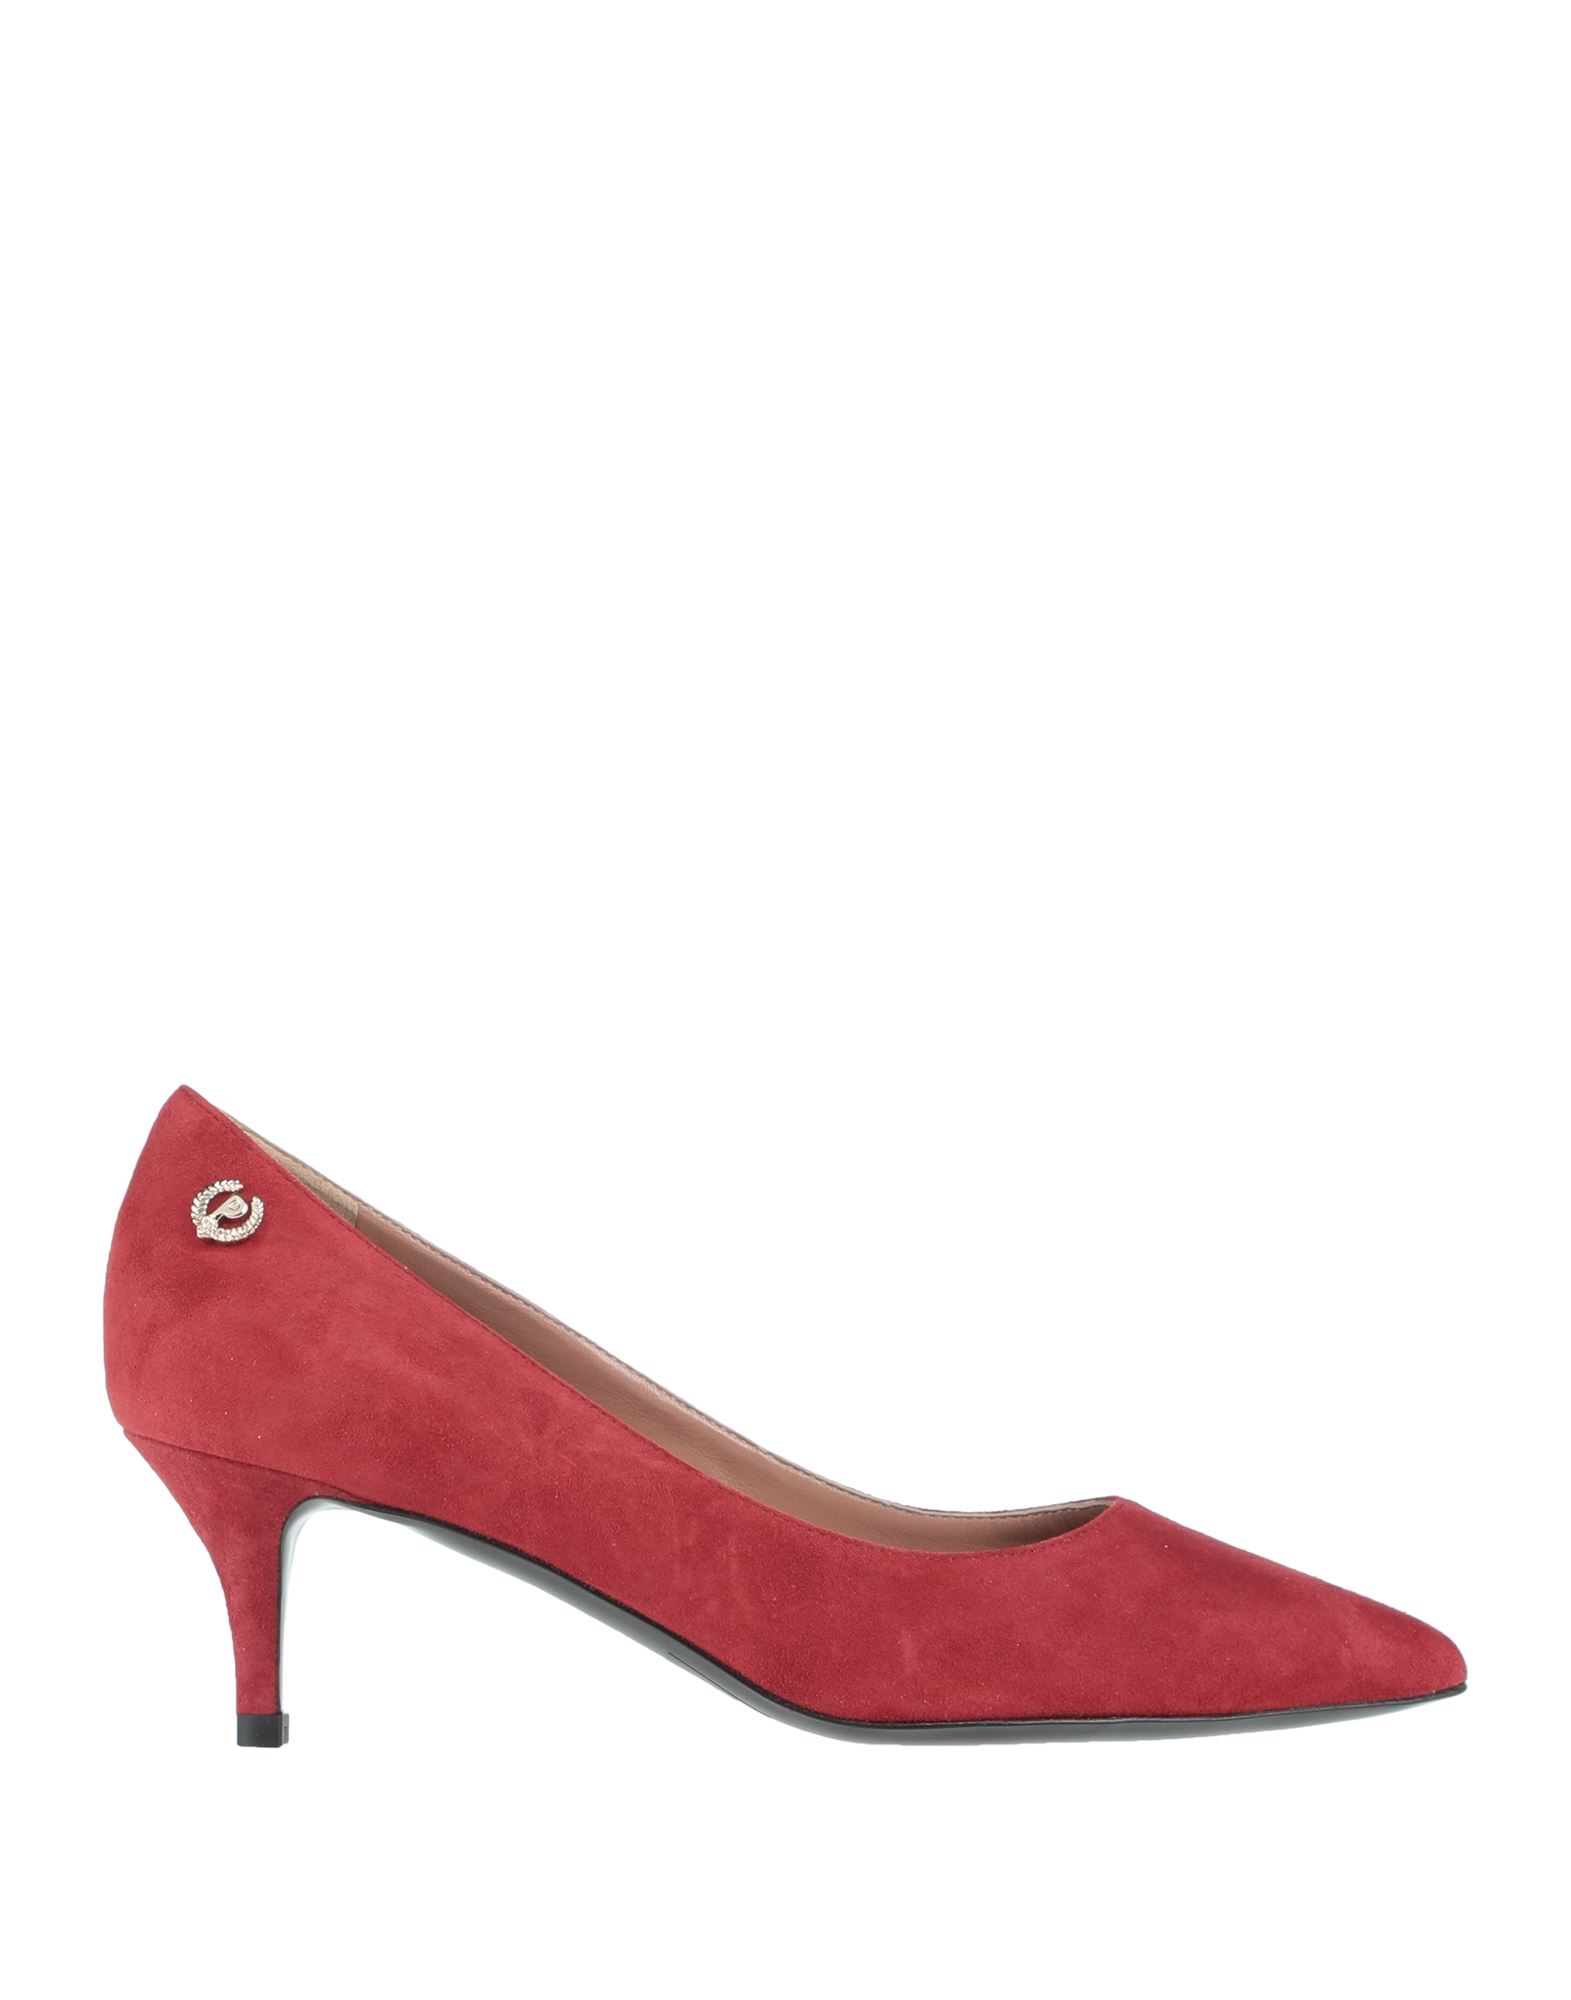 Shop Pollini Woman Pumps Red Size 6.5 Soft Leather